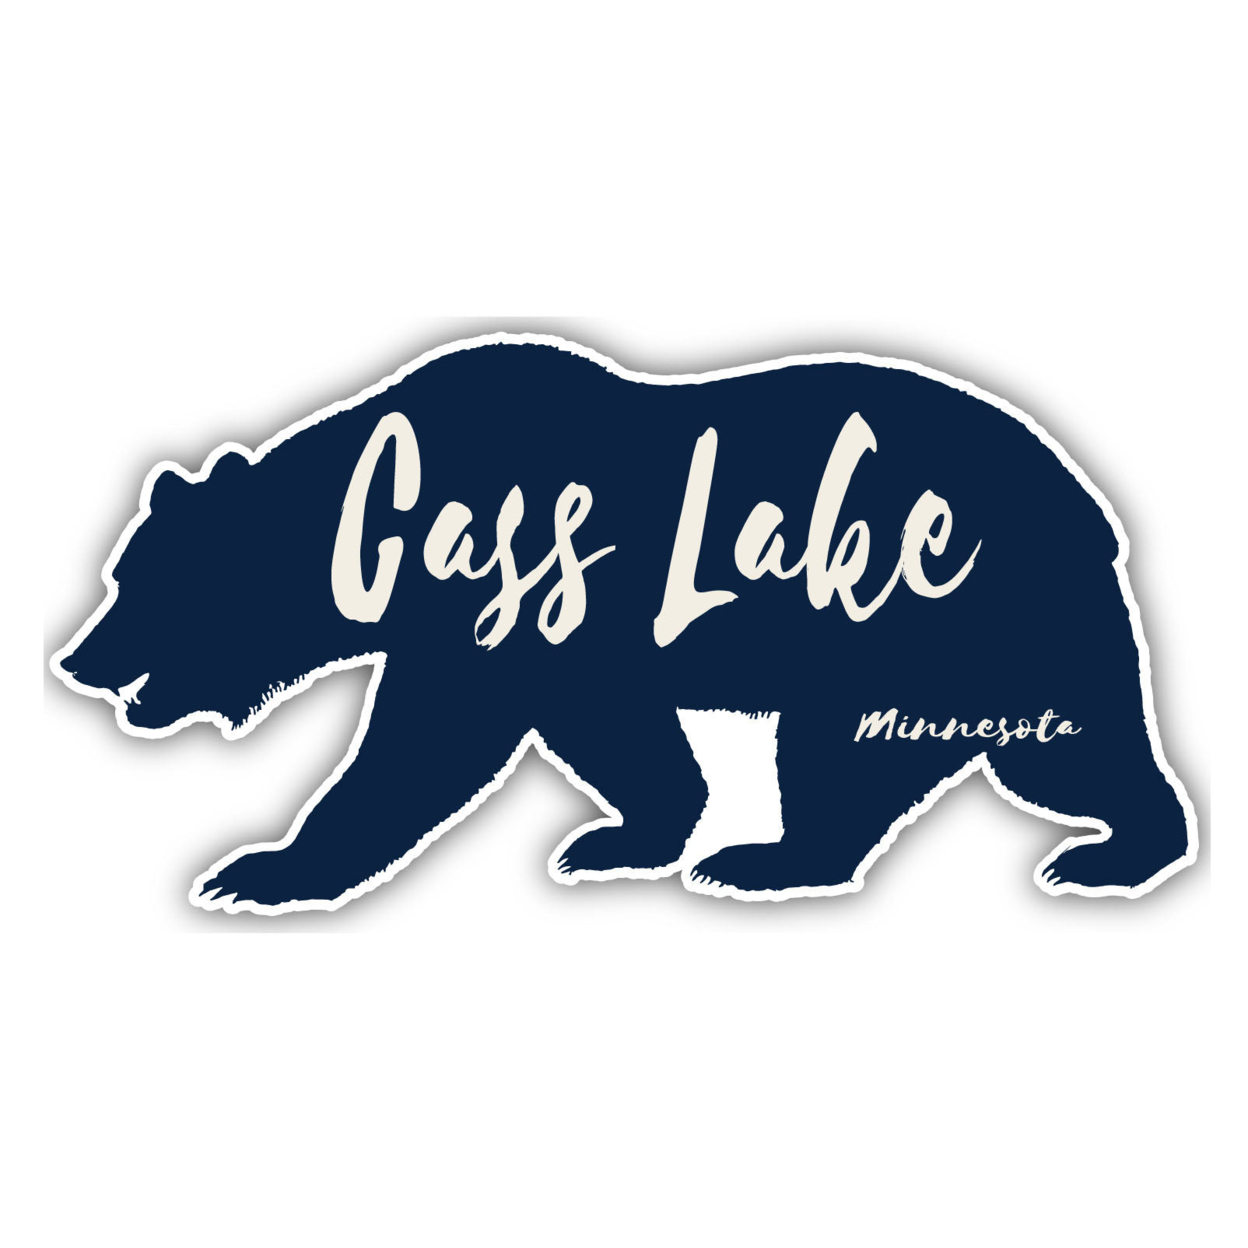 Cass Lake Minnesota Souvenir Decorative Stickers (Choose Theme And Size) - Single Unit, 8-Inch, Bear